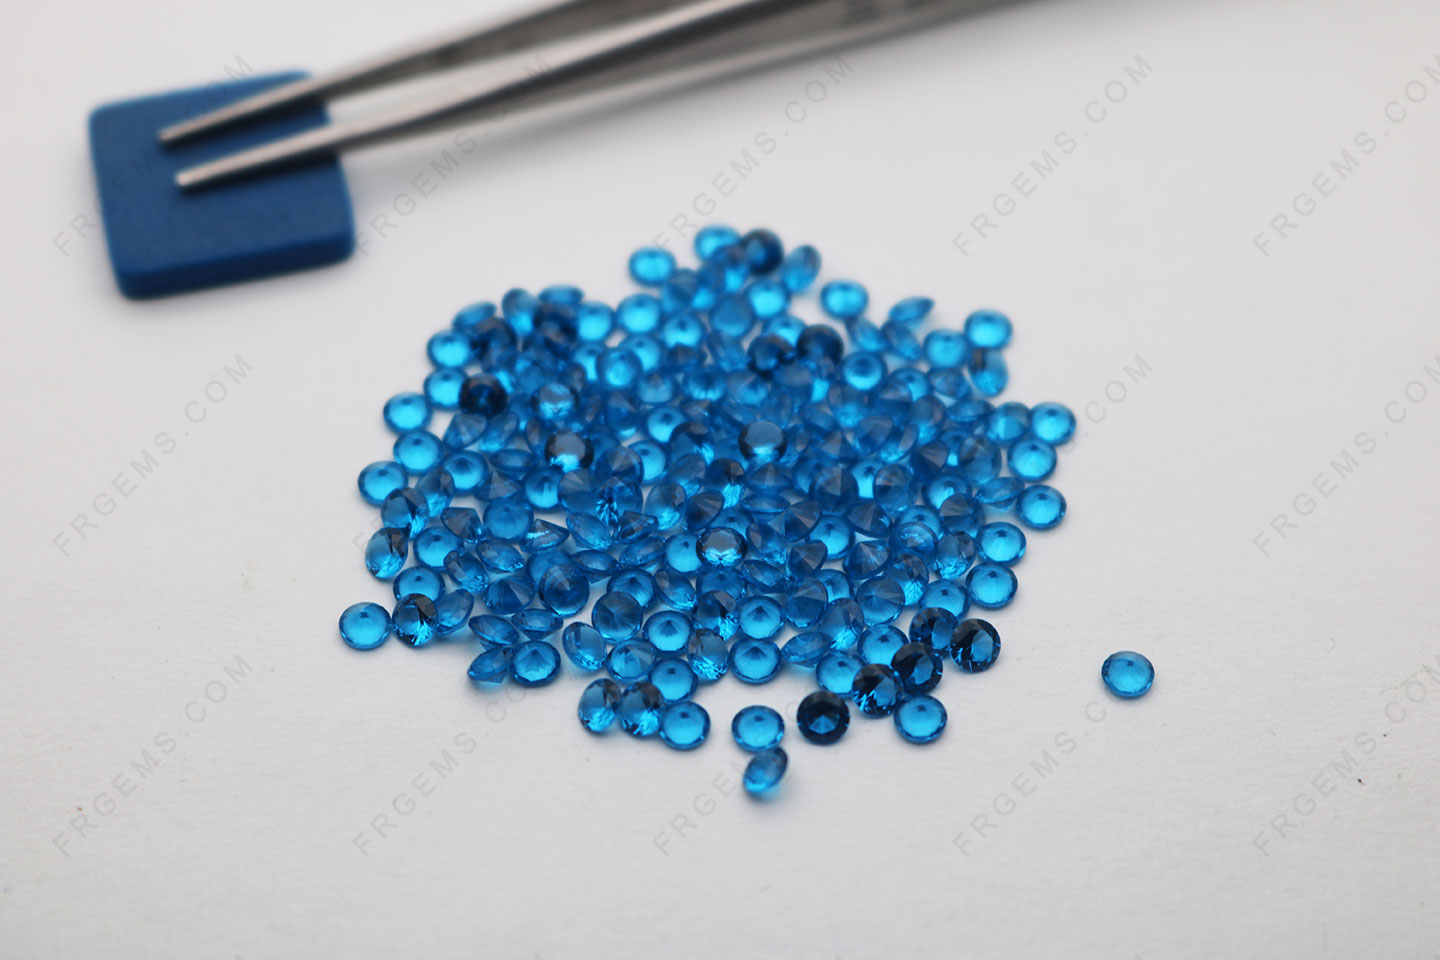 Wholesale Loose Nano Topaz London Blue #141 Color Round Shape Faceted Cut 3mm gemstones